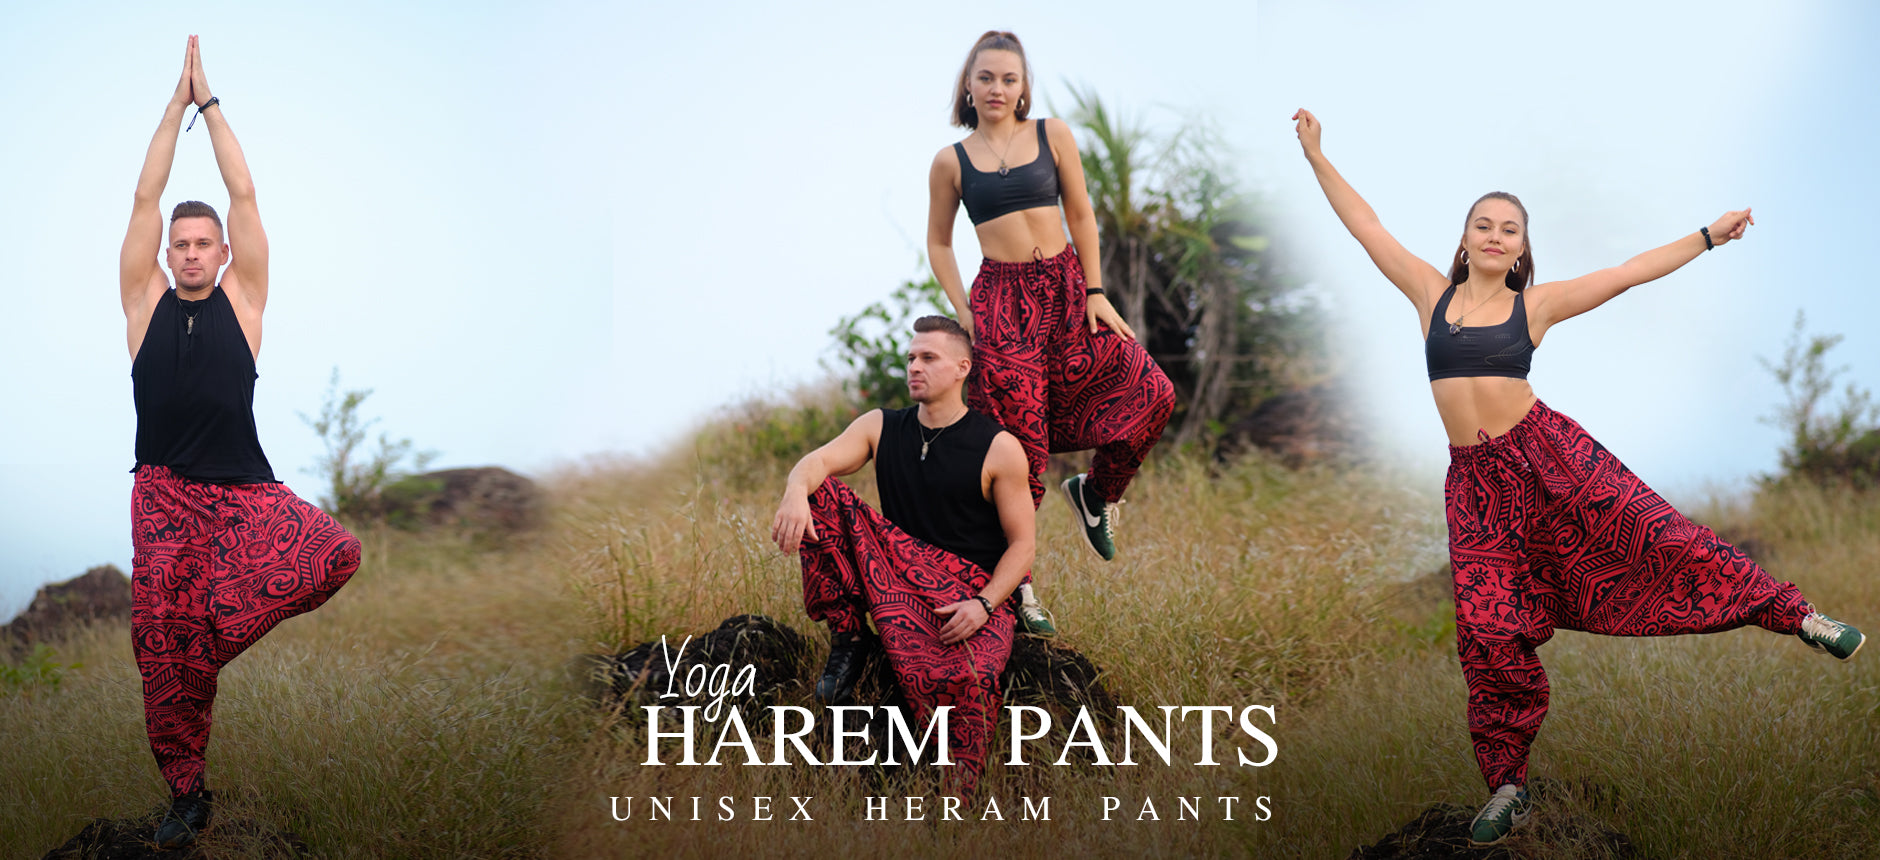 Enimane Unisex Harem Pants For Dance Travel Yoga